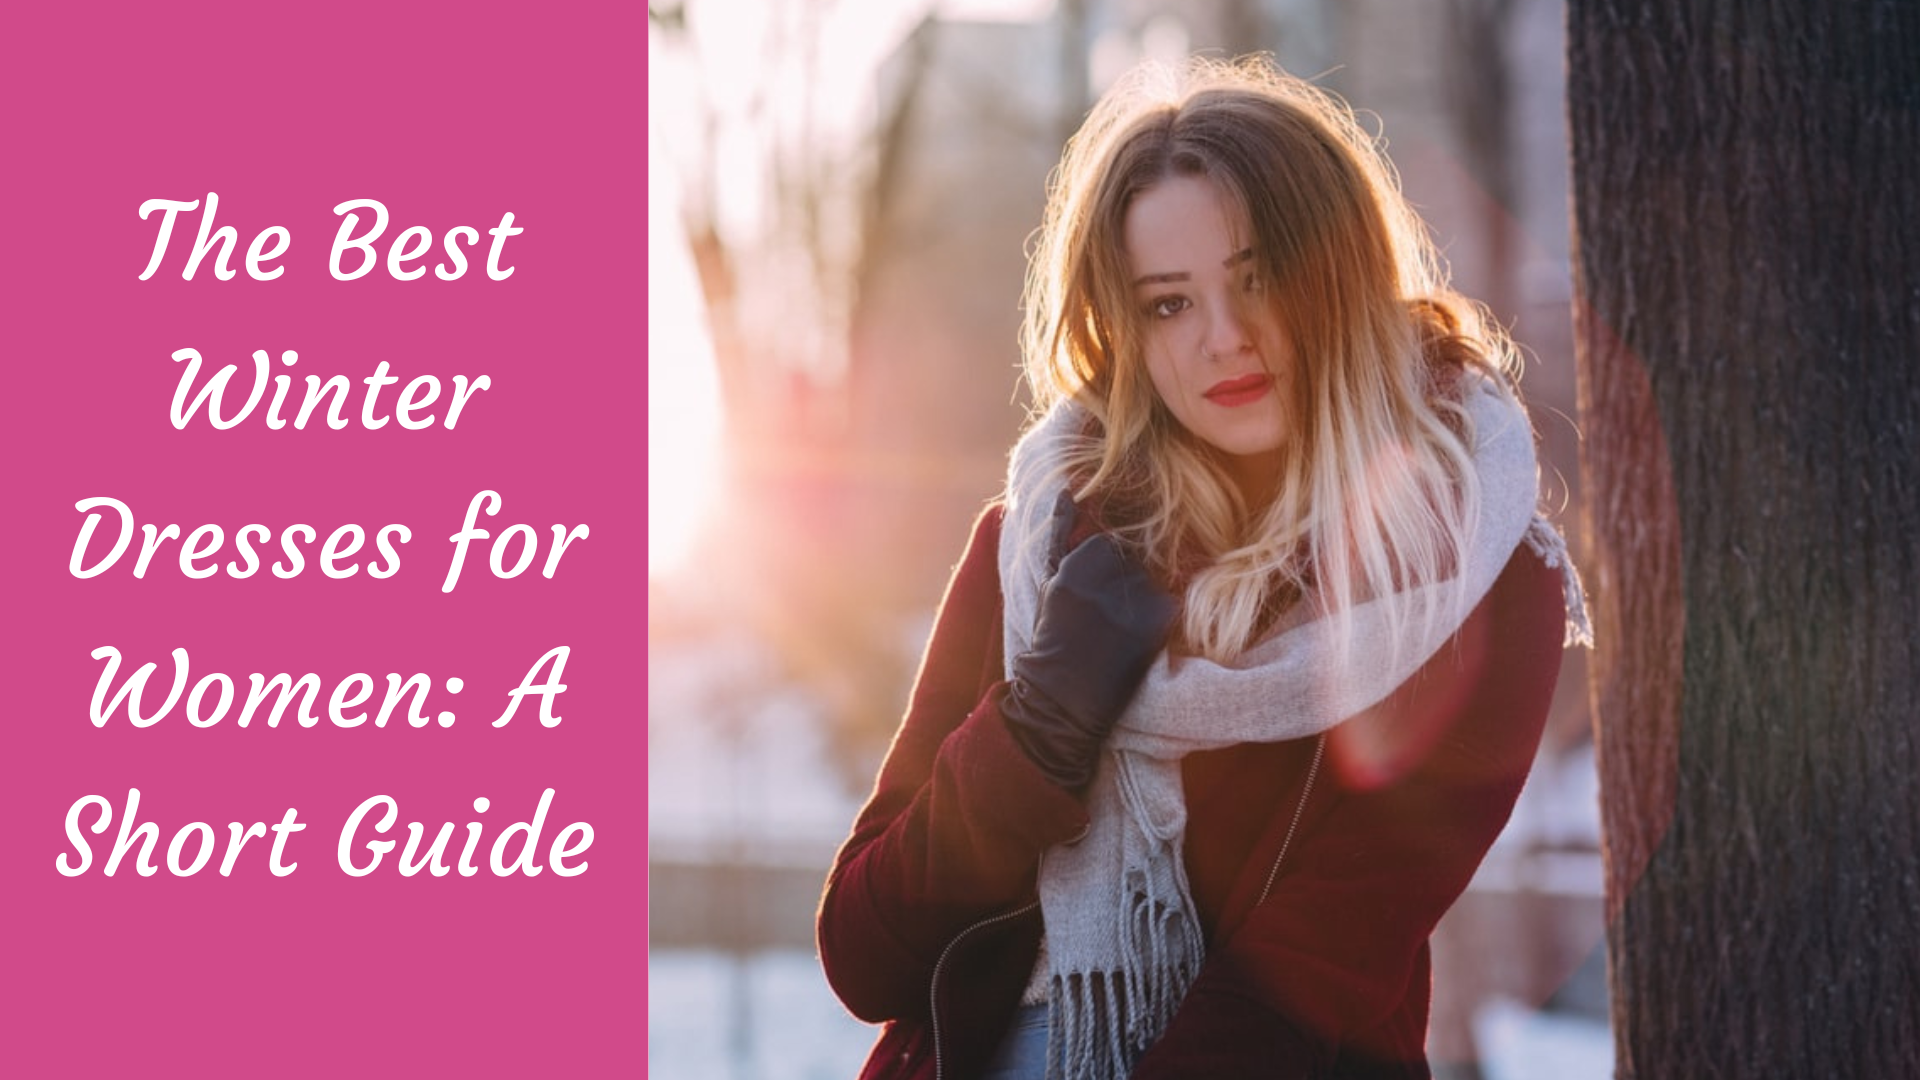 The Best Winter Dresses for Women: A Short Guide - The Kosha Journal